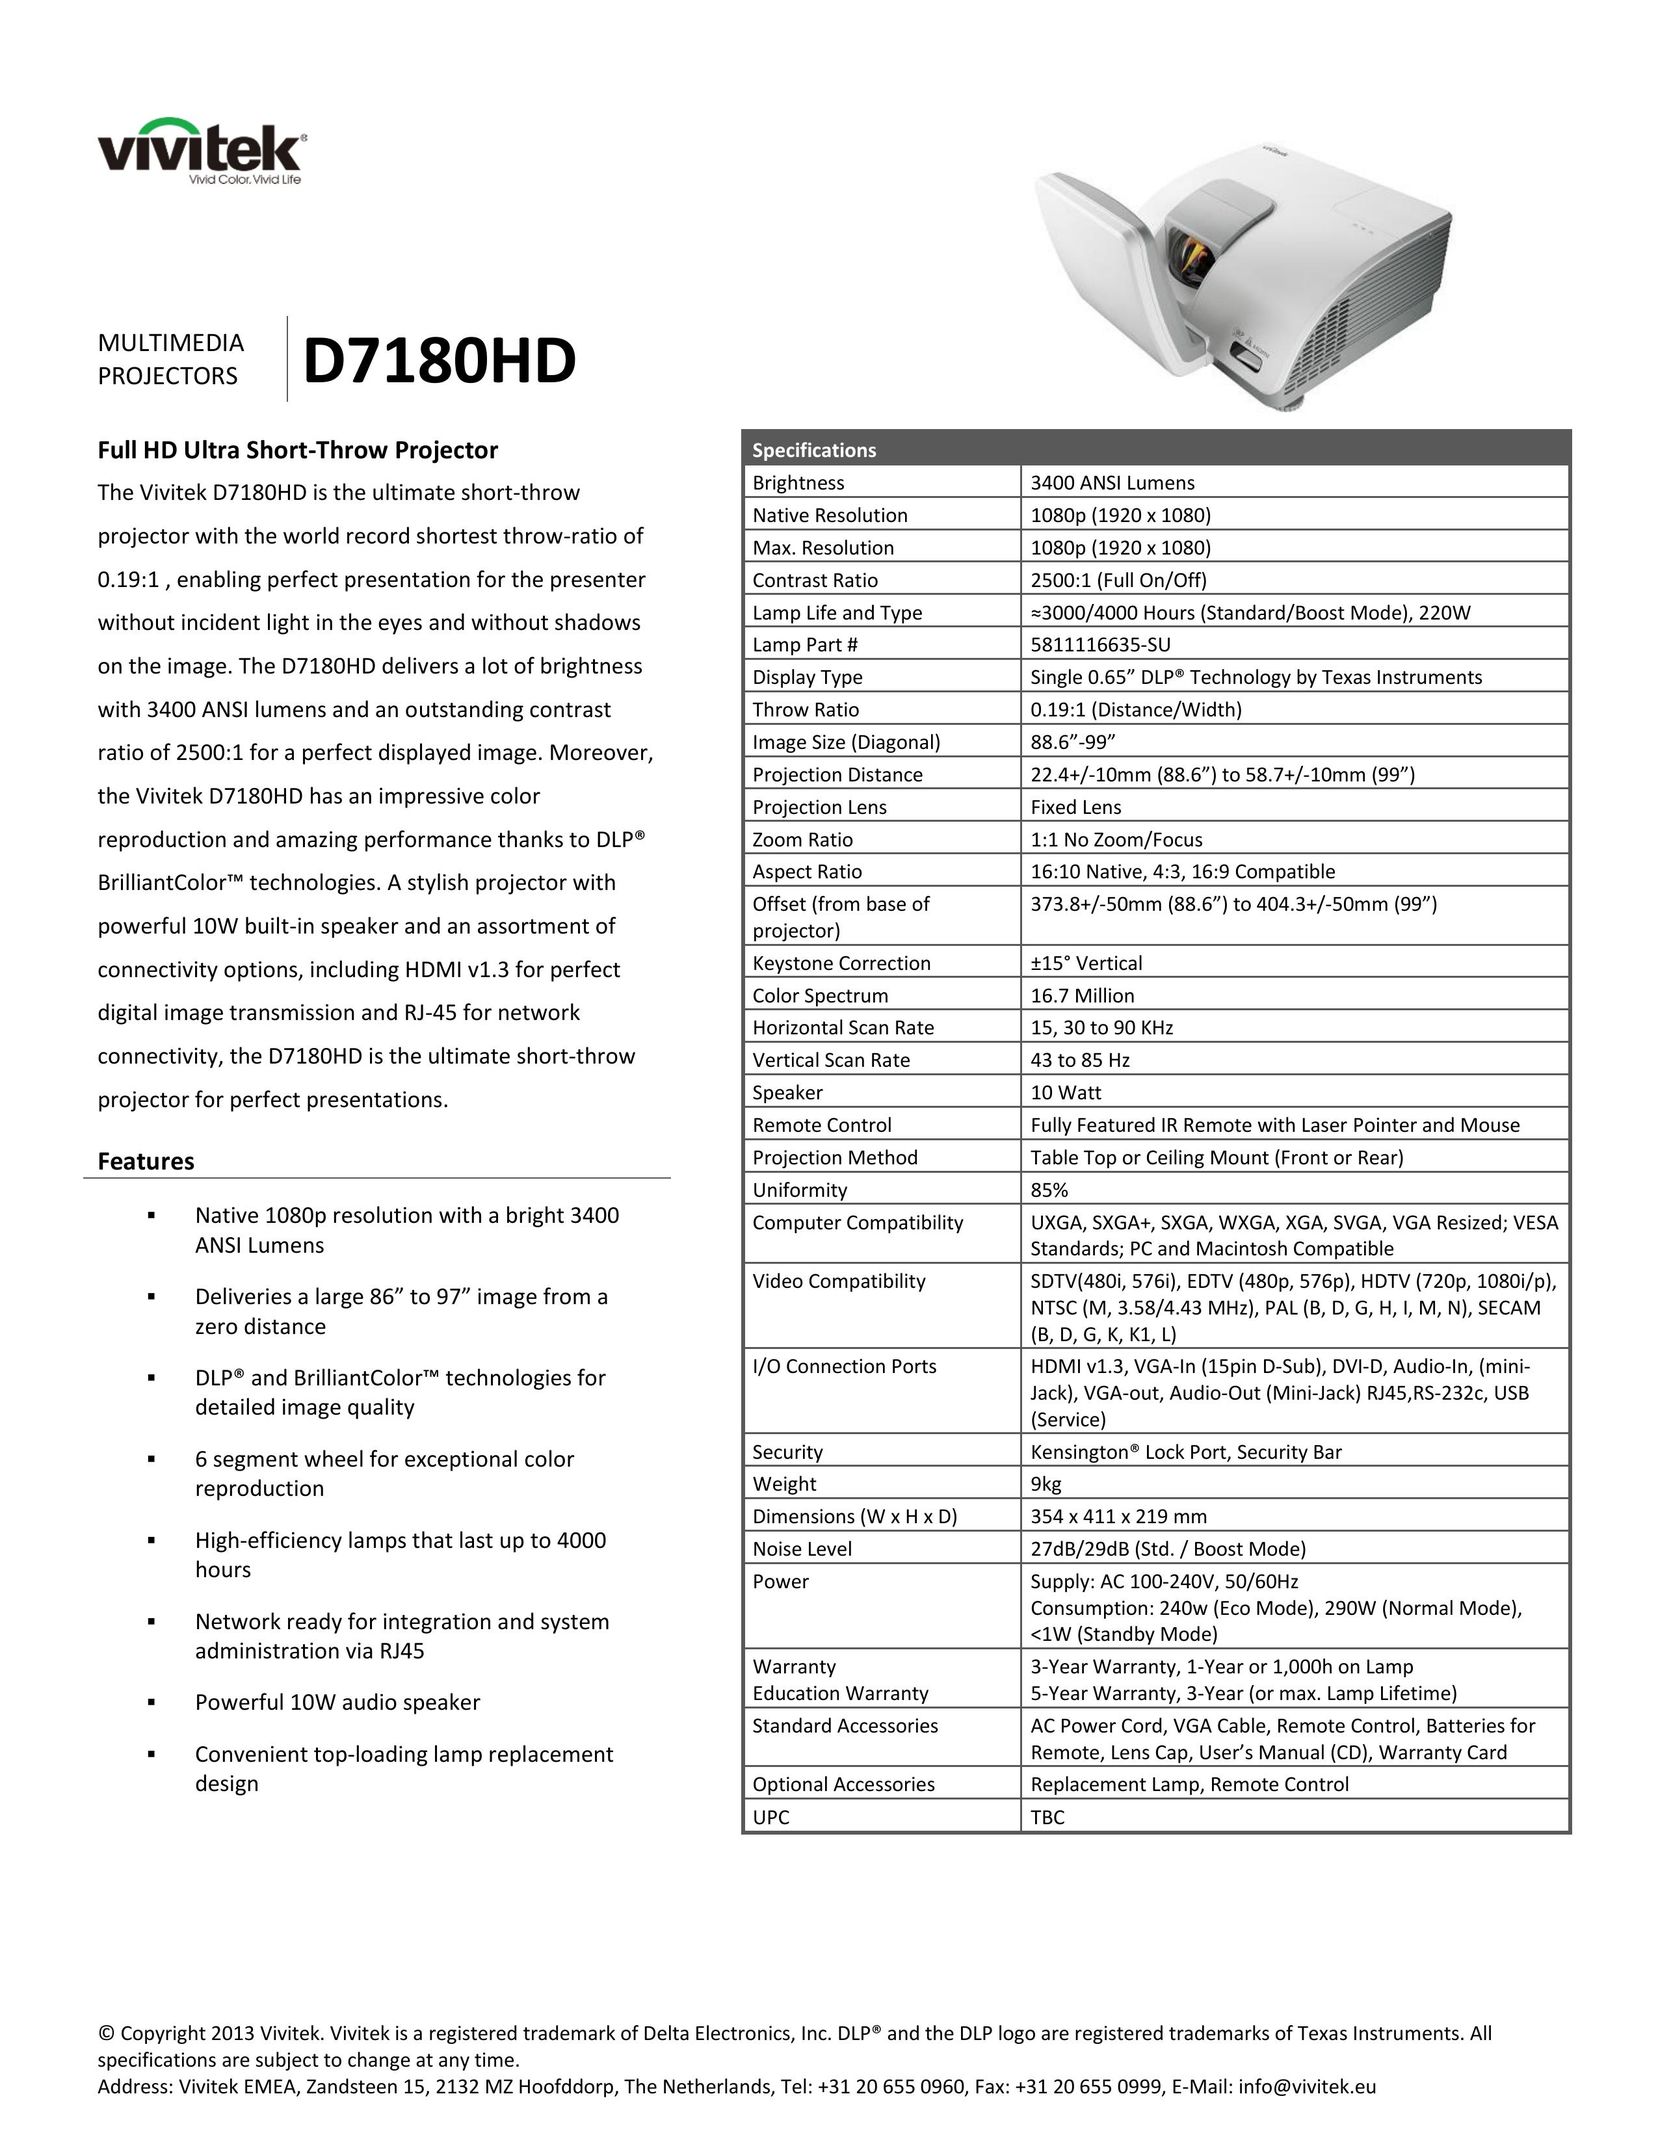 Vivitek D7180HD Projector User Manual